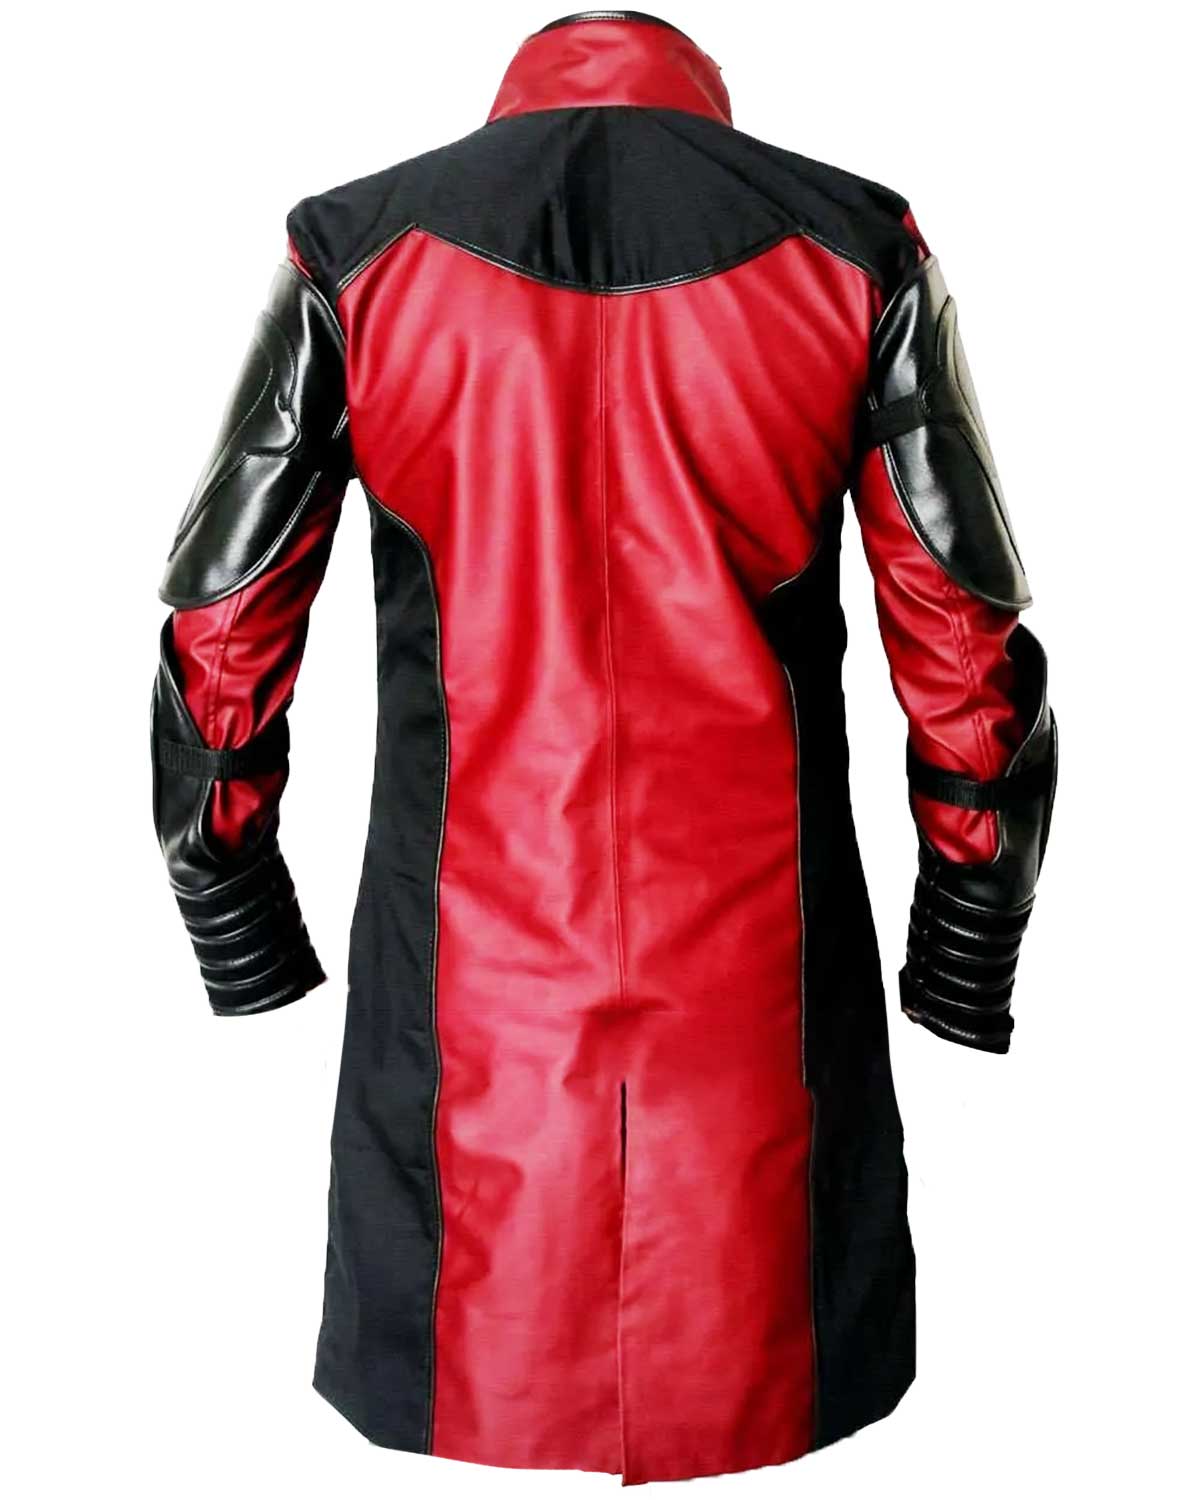 Avengers Age of Ultron Hawkeye Oversized Leather Coat Jacket 